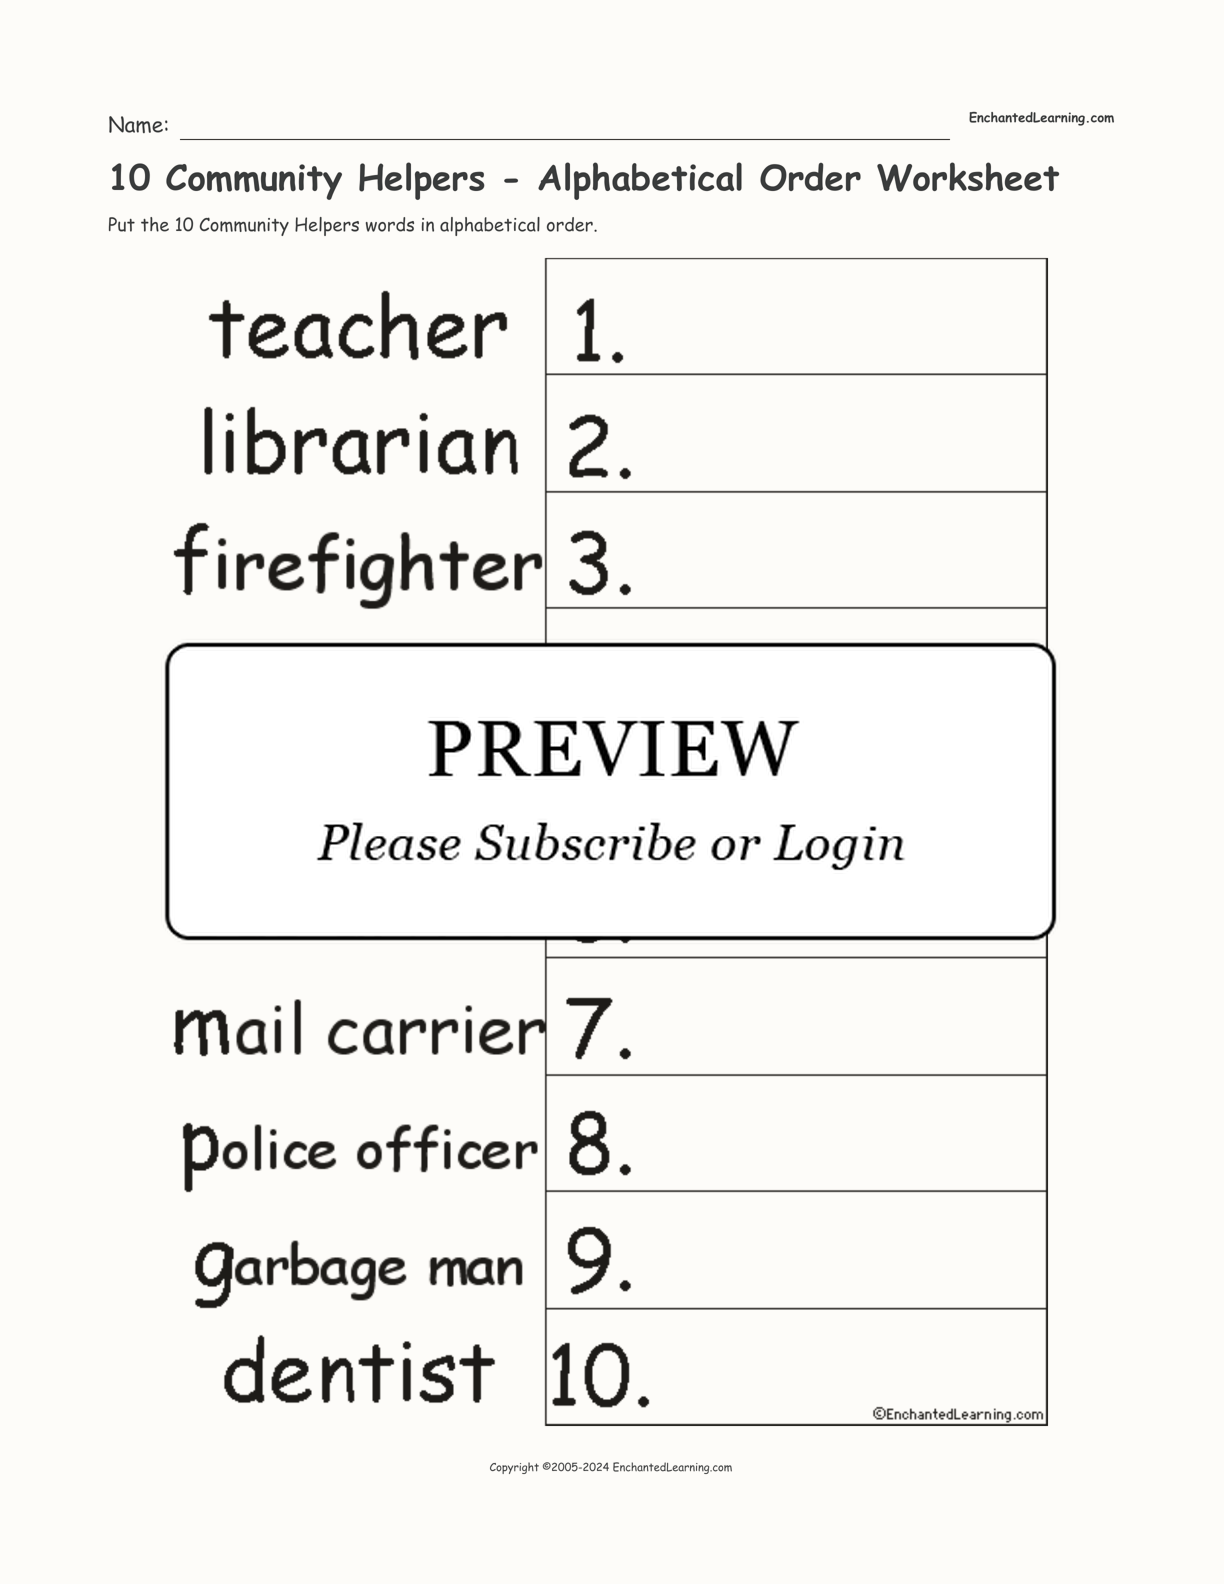 10 Community Helpers - Alphabetical Order Worksheet interactive worksheet page 1